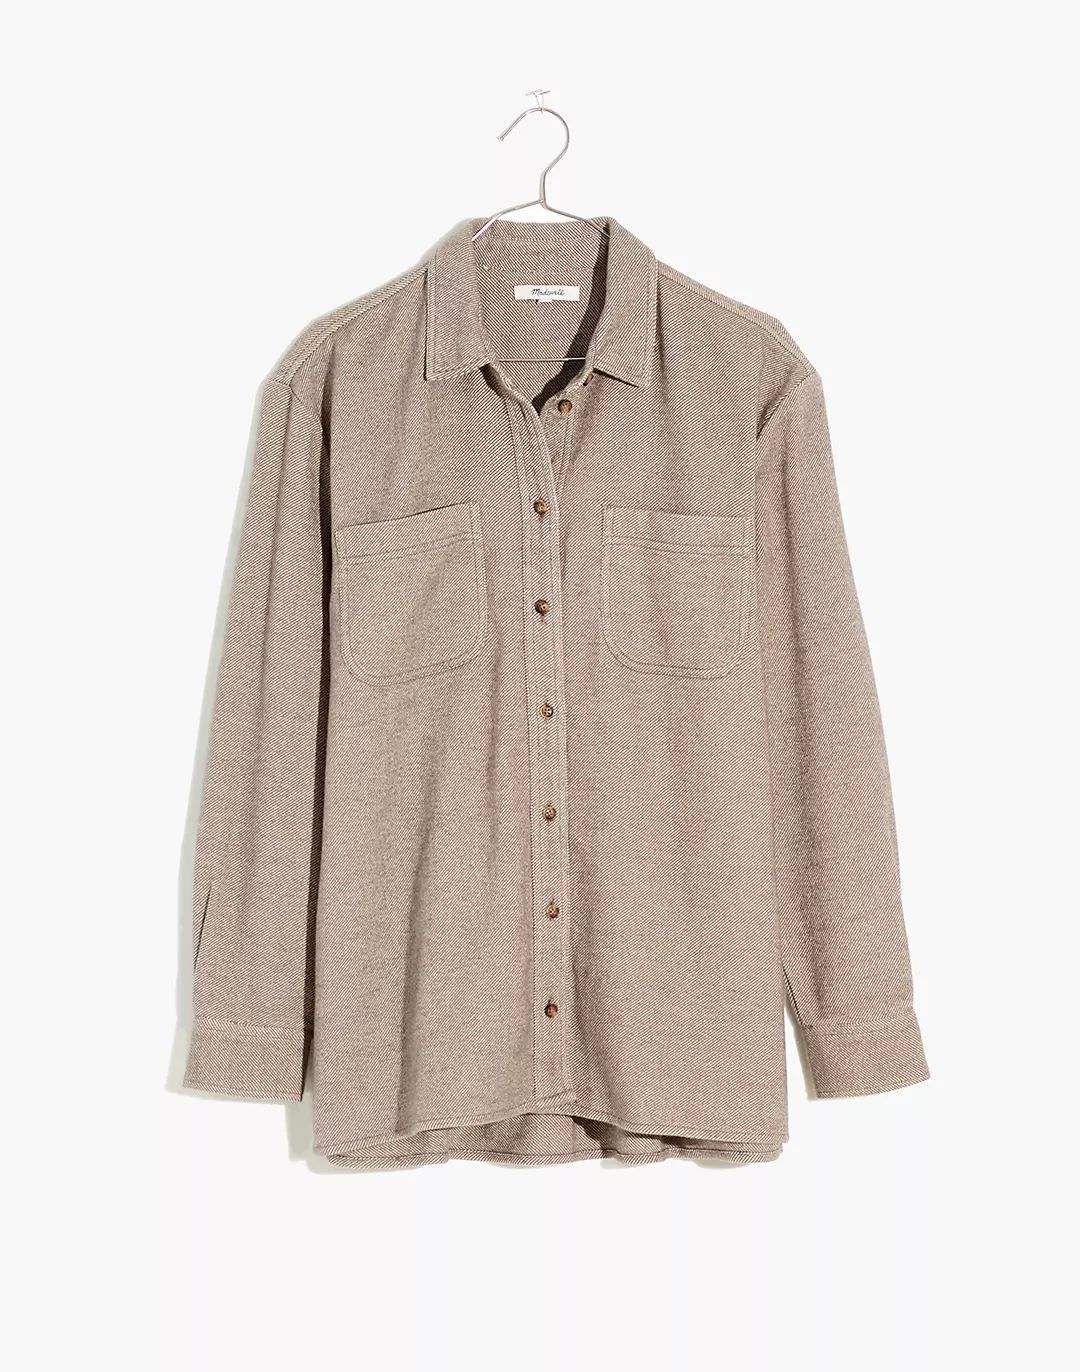 Oversized Ex-Boyfriend Shirt in Flannel: Seamed Edition | Madewell